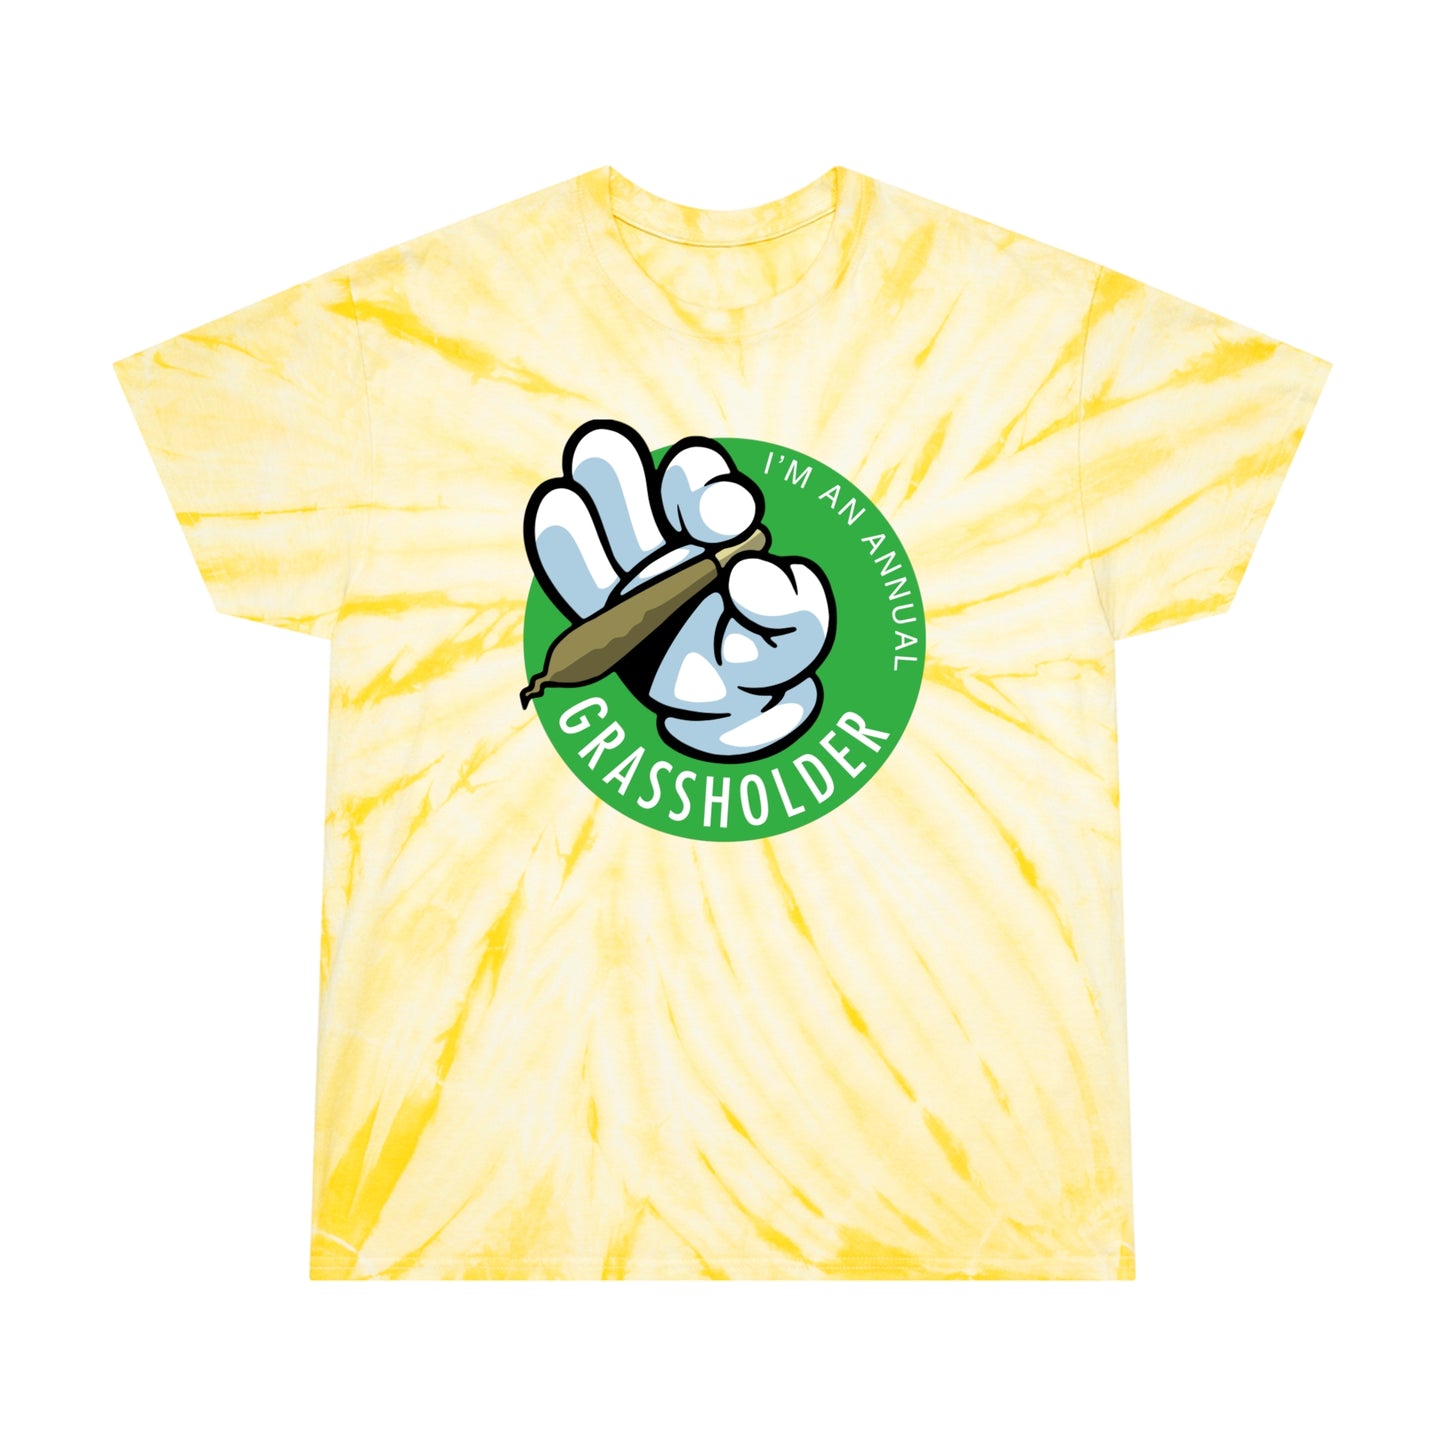 Annual Grassholder tie-dye t-shirt